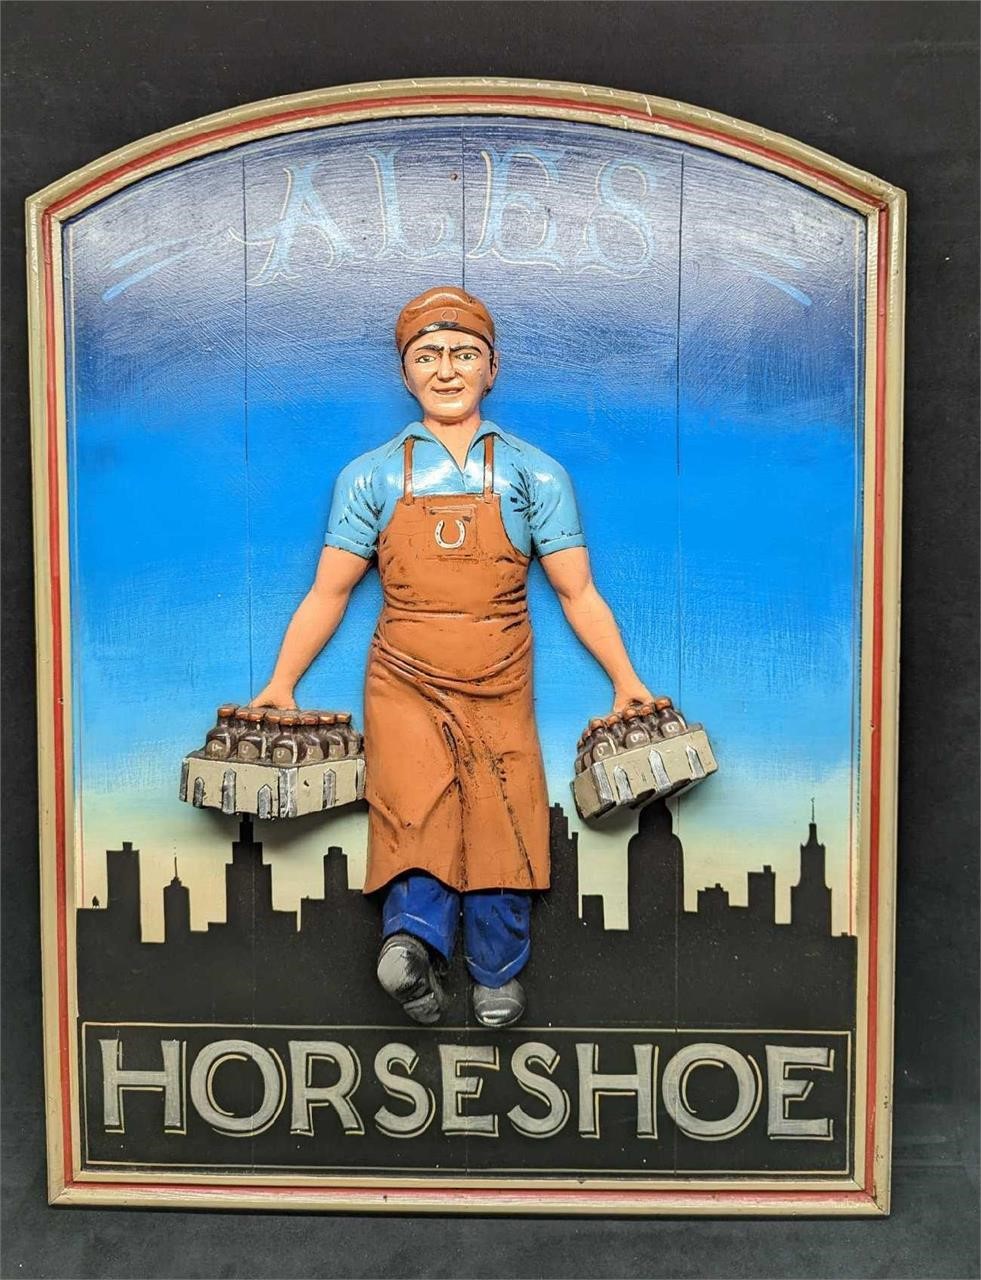 Vintage Horseshoe Ales 3D Bar Sign